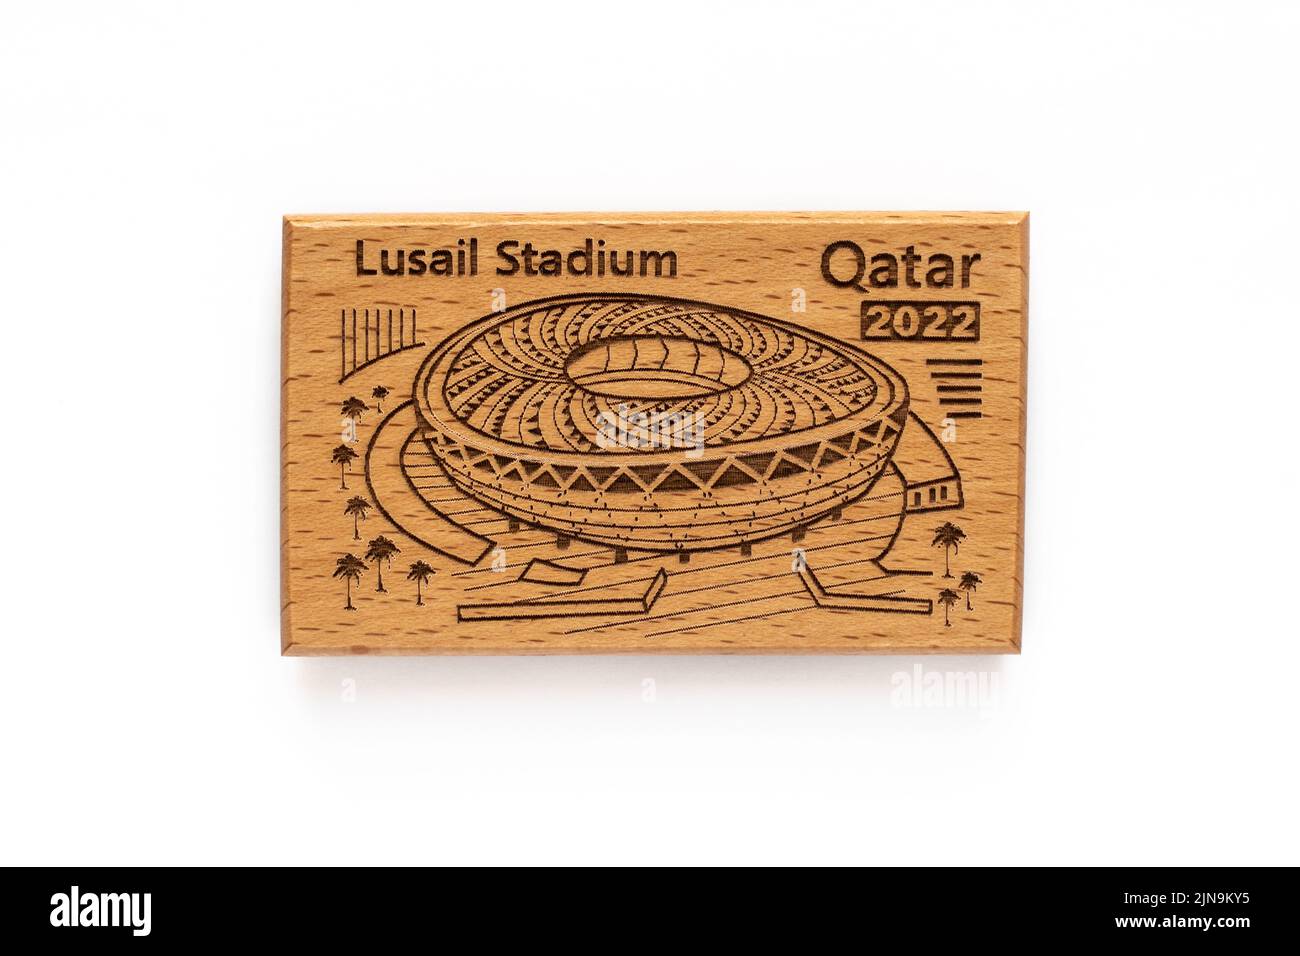 DOHA, QATAR - AUGUST 10, 2022: Lusail Stadium Qatar fridge magnet. Qatar will be hosting FIFA World Cup 2022. Stock Photo